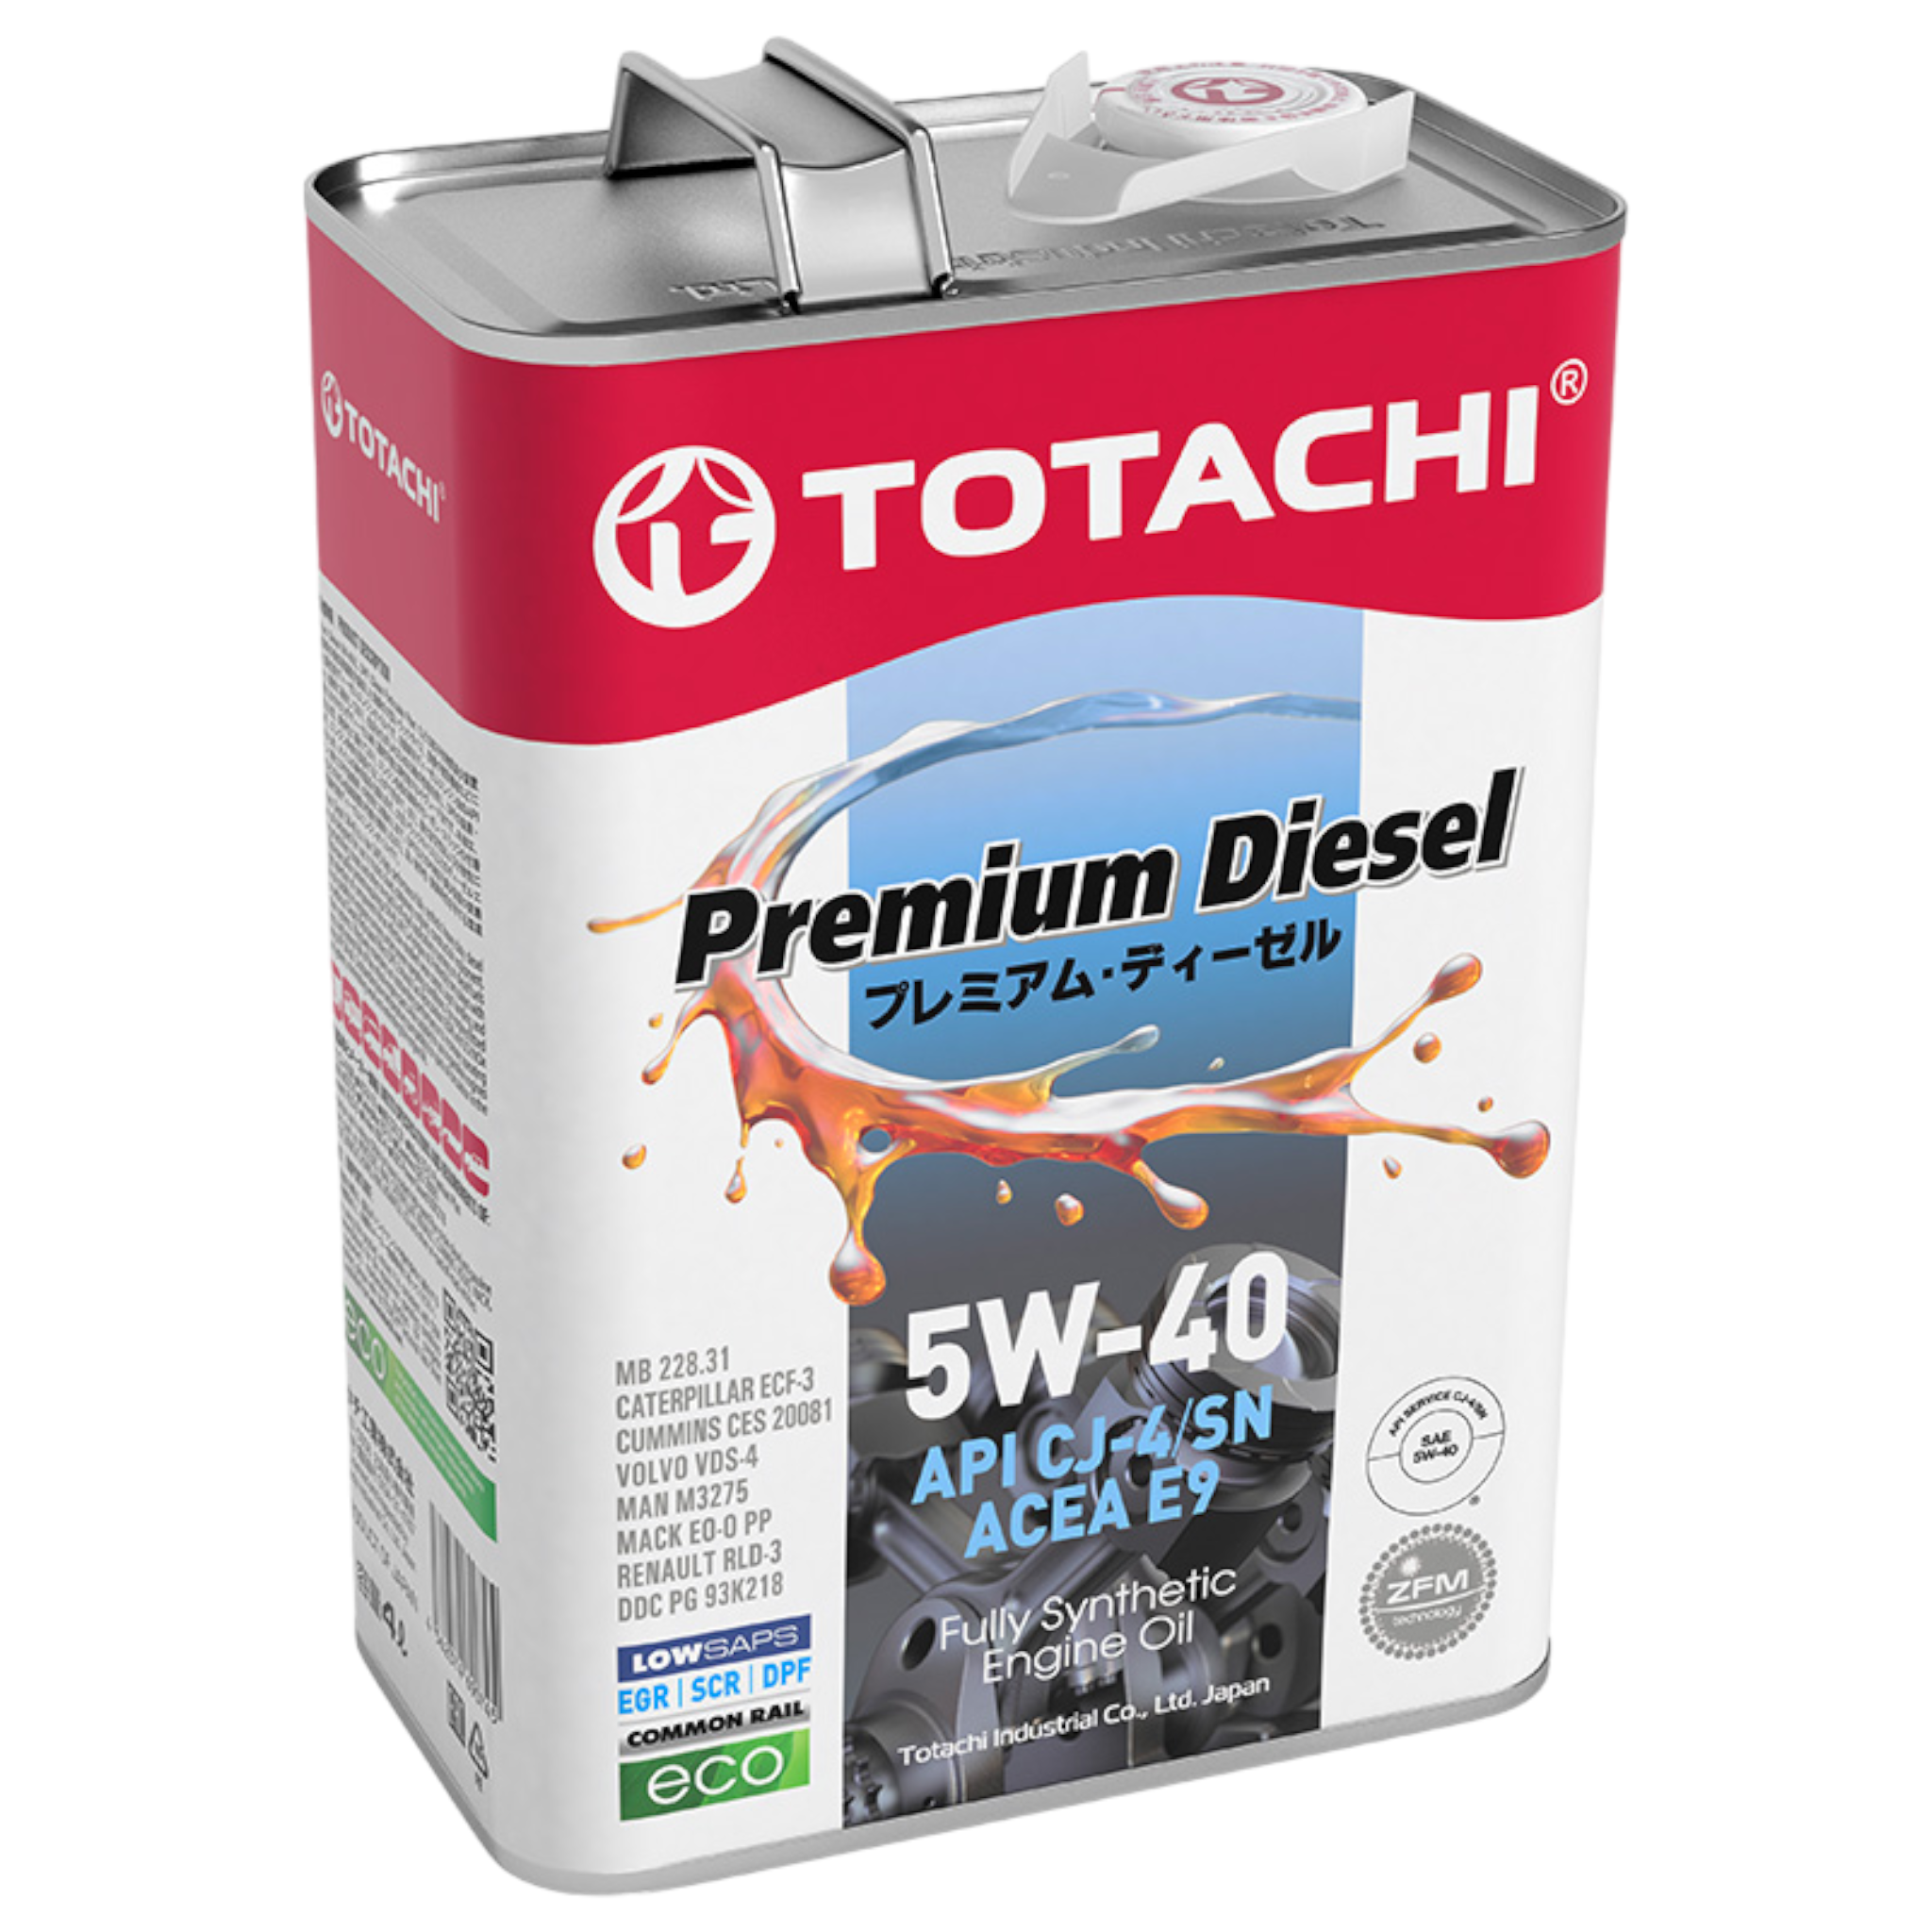 Totachi Premium Diesel 5W-40 (4 Liter)